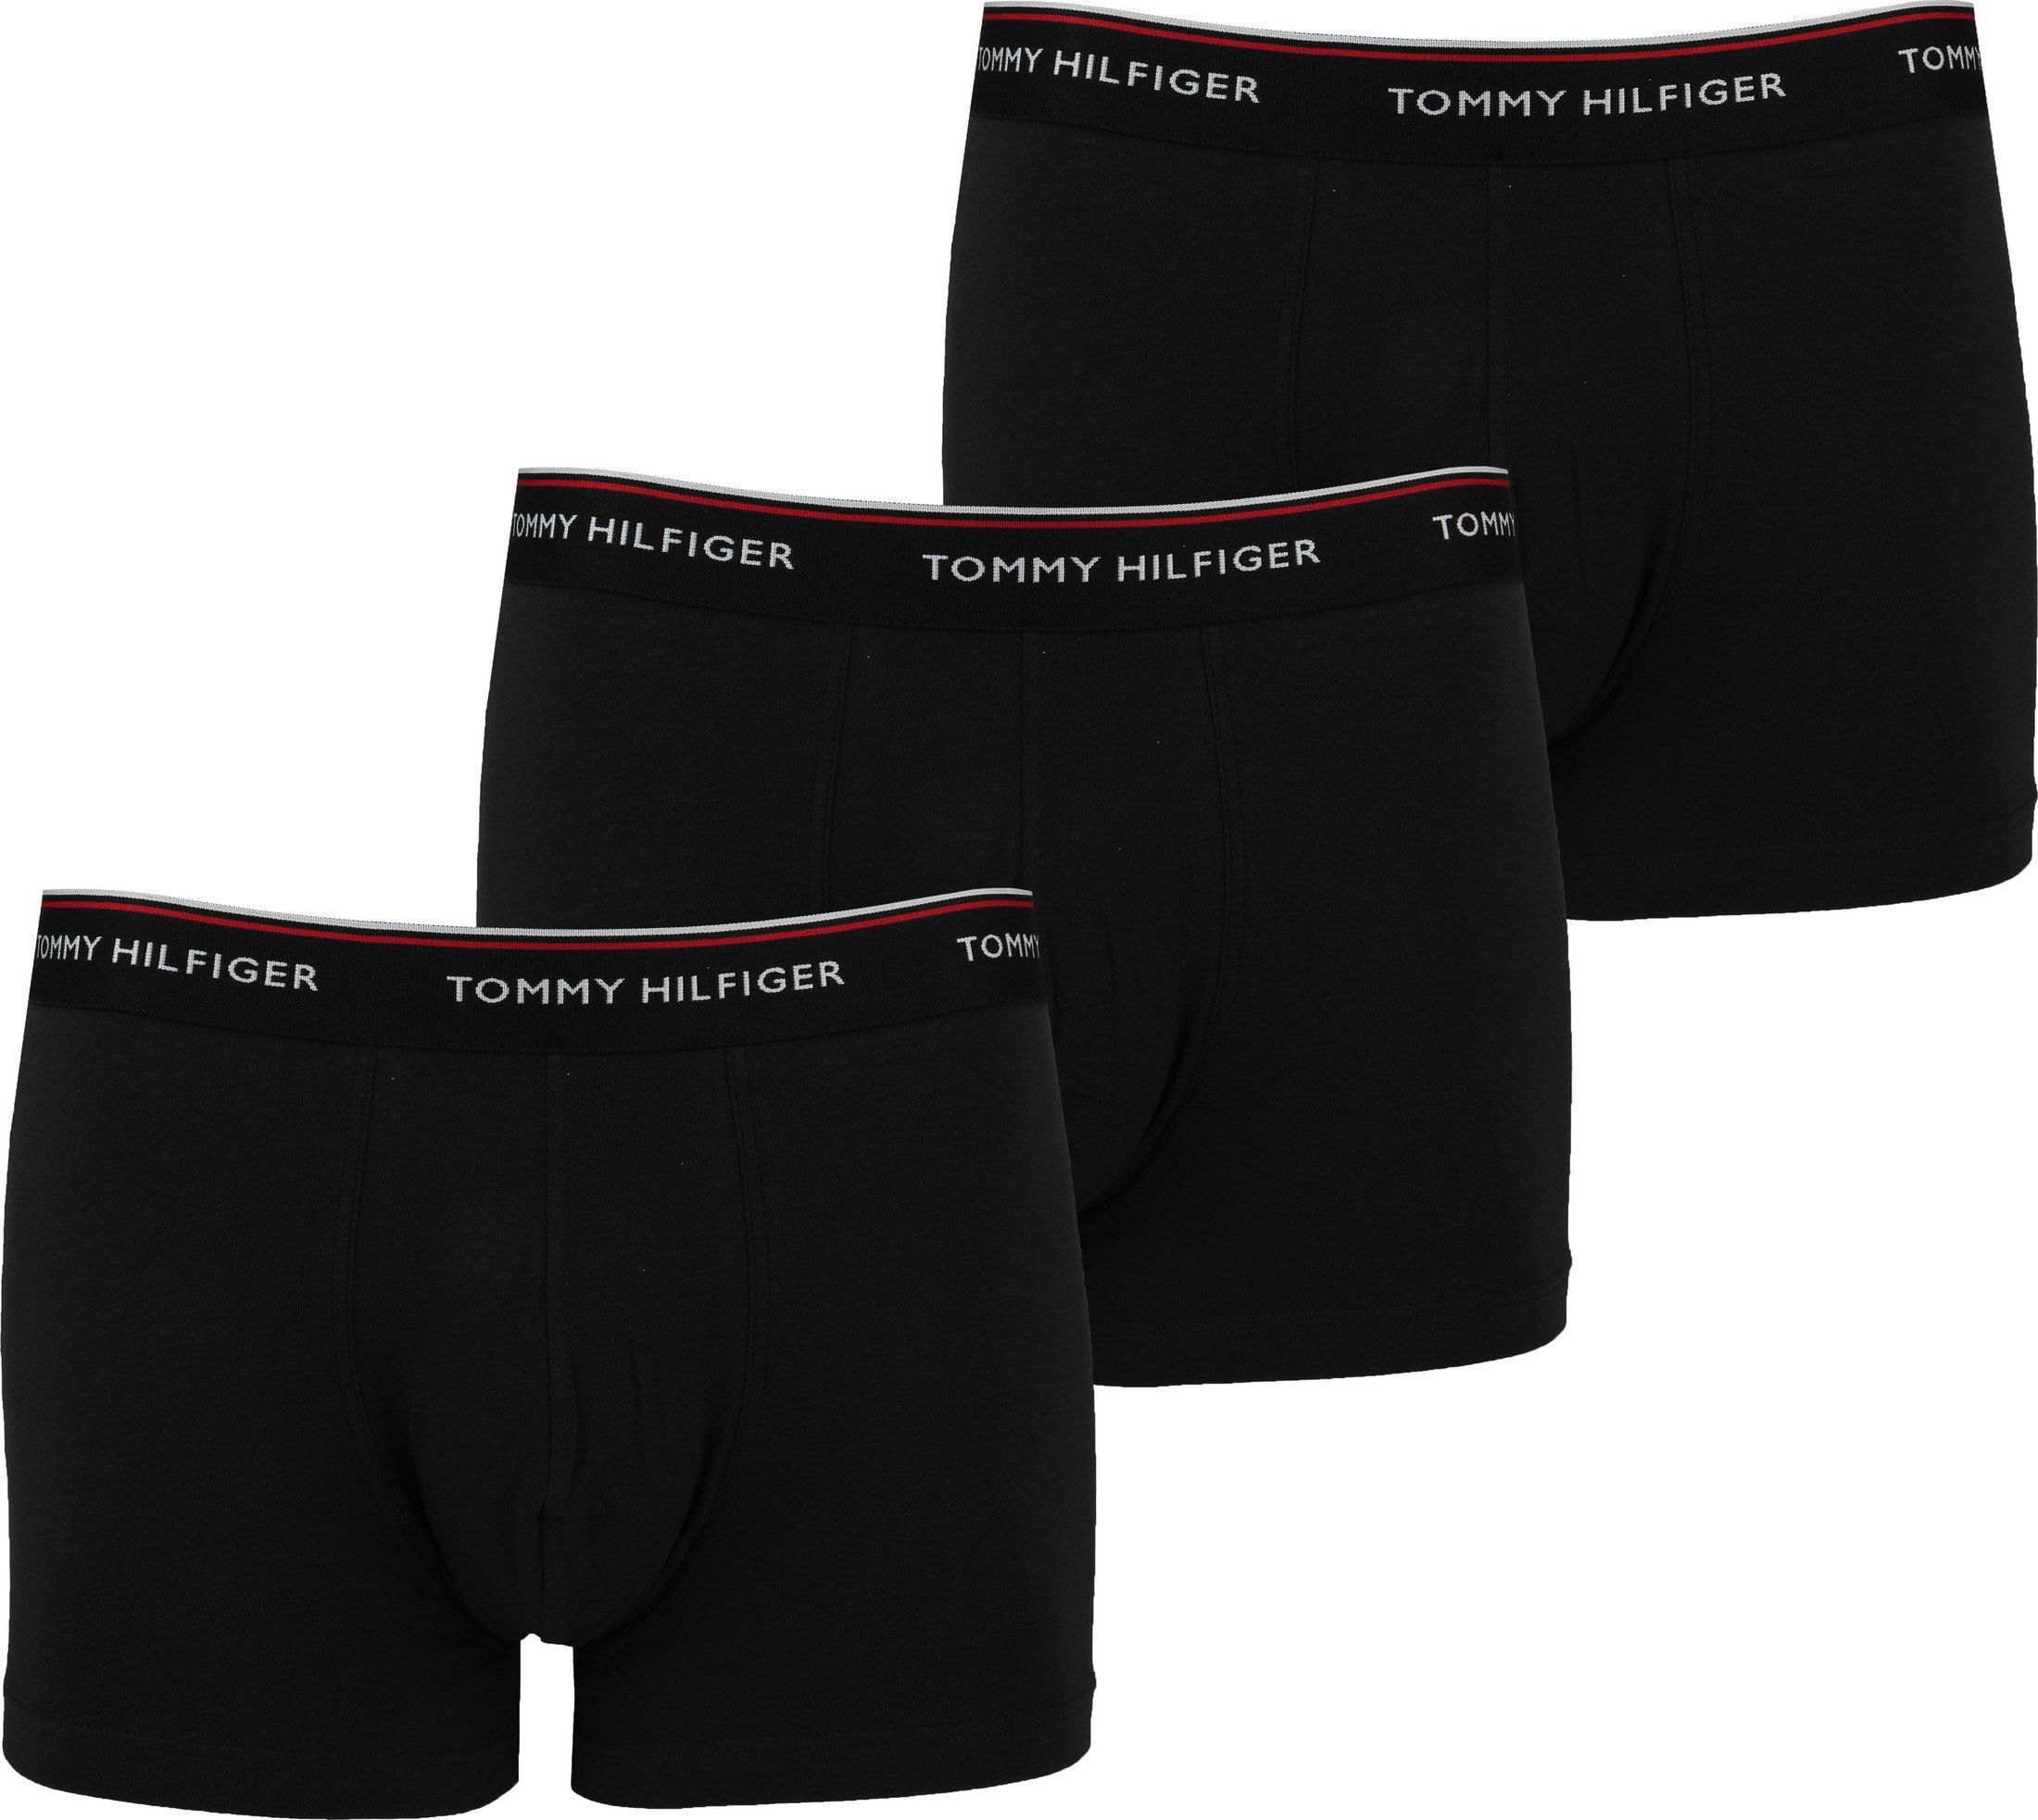 Tommy Hilfiger Boxer Shorts 3-Pack Trunk Black size XL